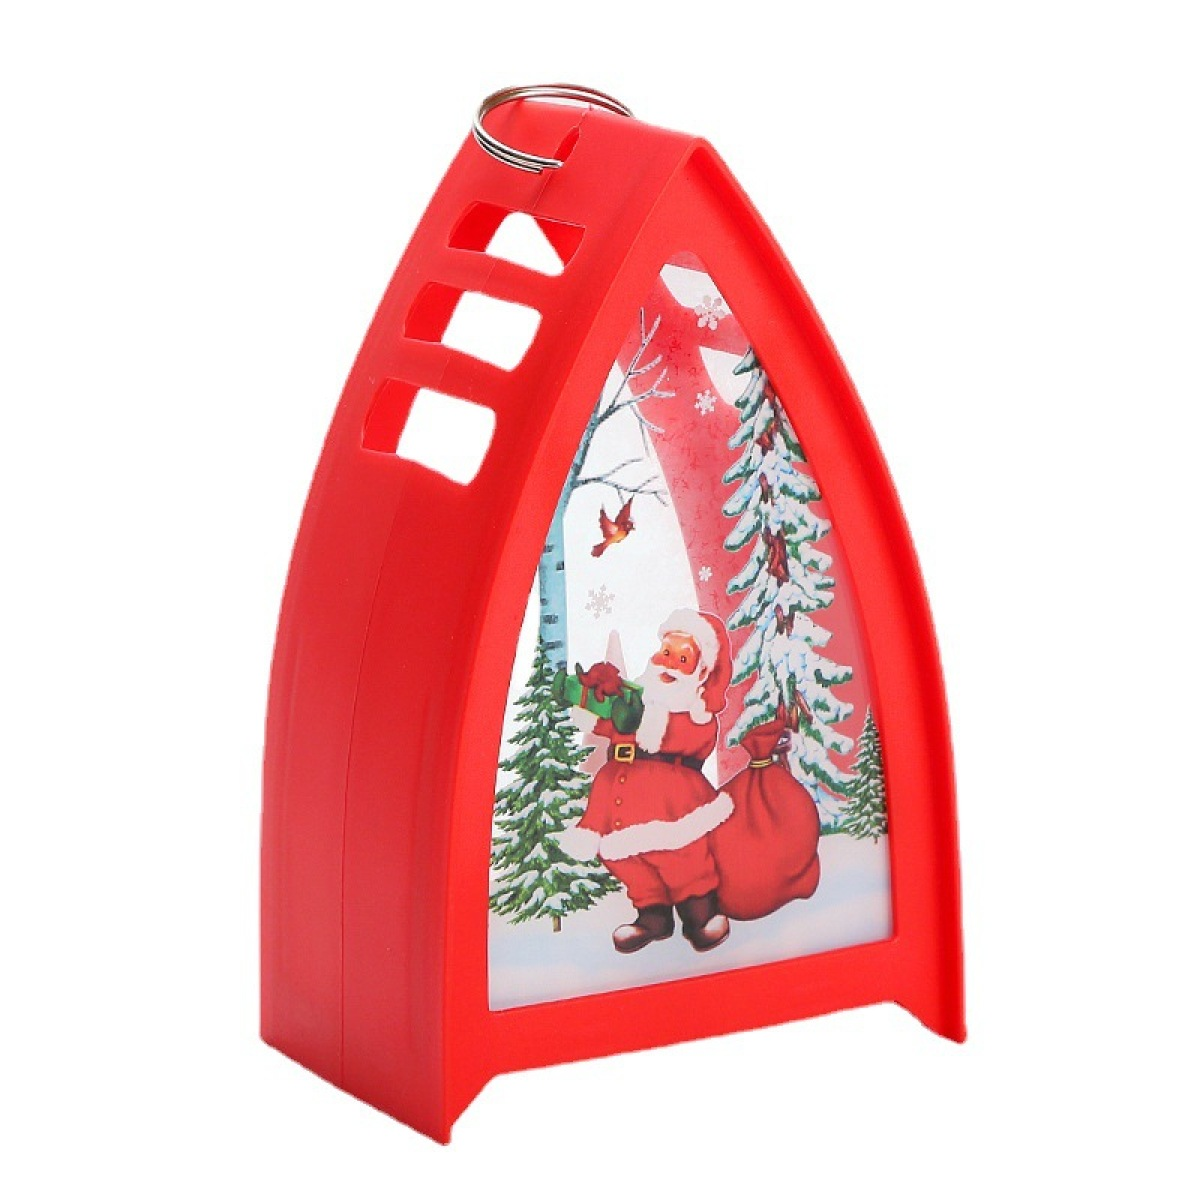 COZEVDNT Decorative Holiday - Christmas Lantern Bronze Indoor for Outdoor Weihnachtsdeko, Decor and